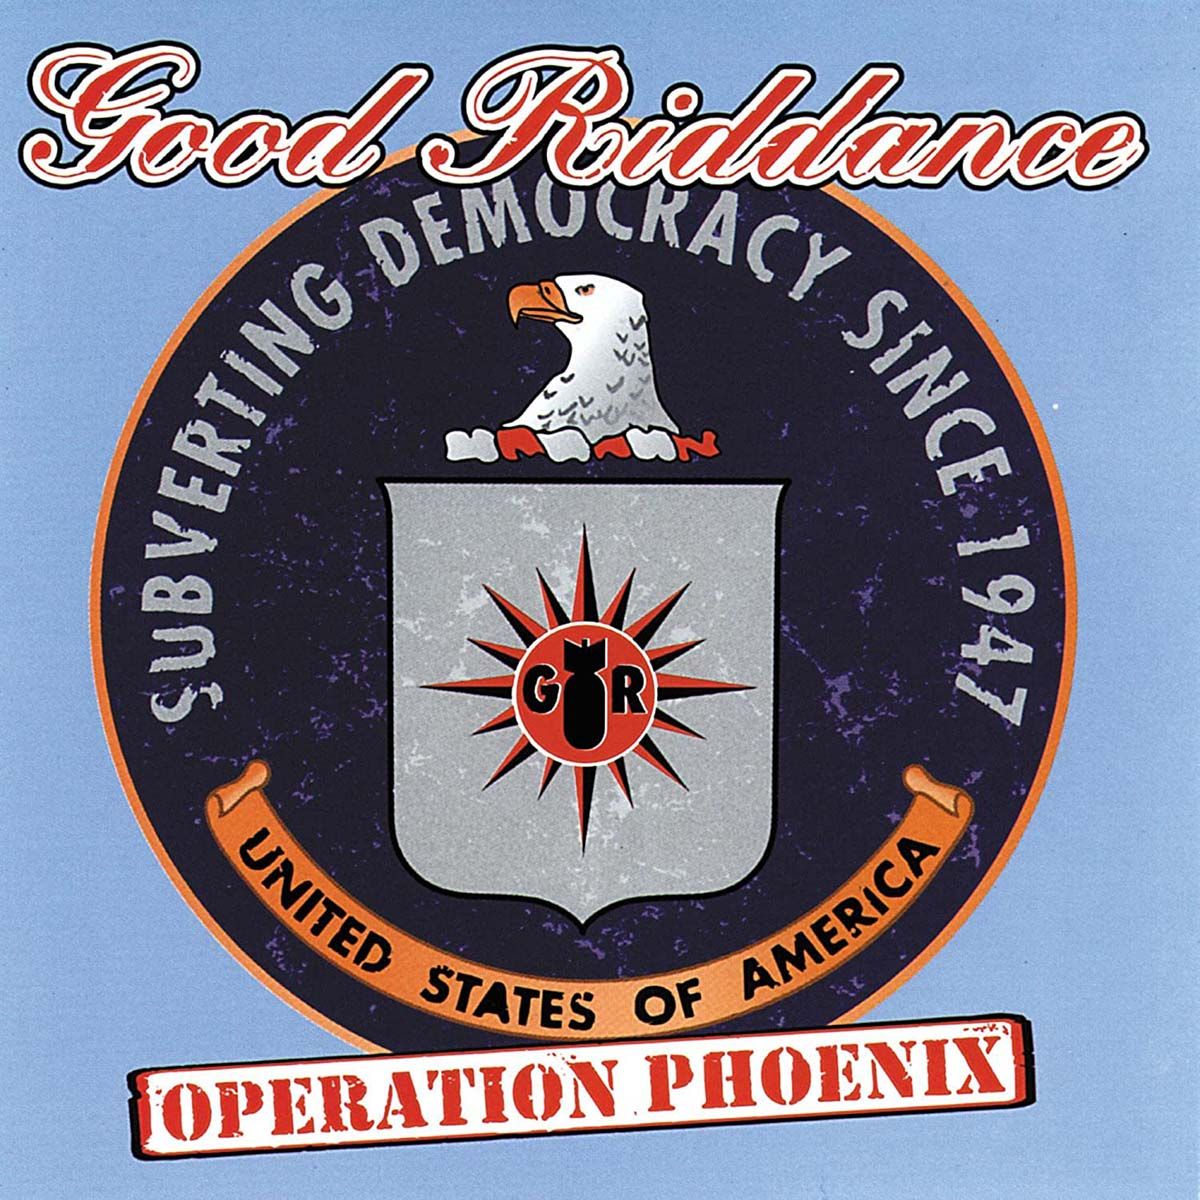 Good Ridance - Operation Phoenix